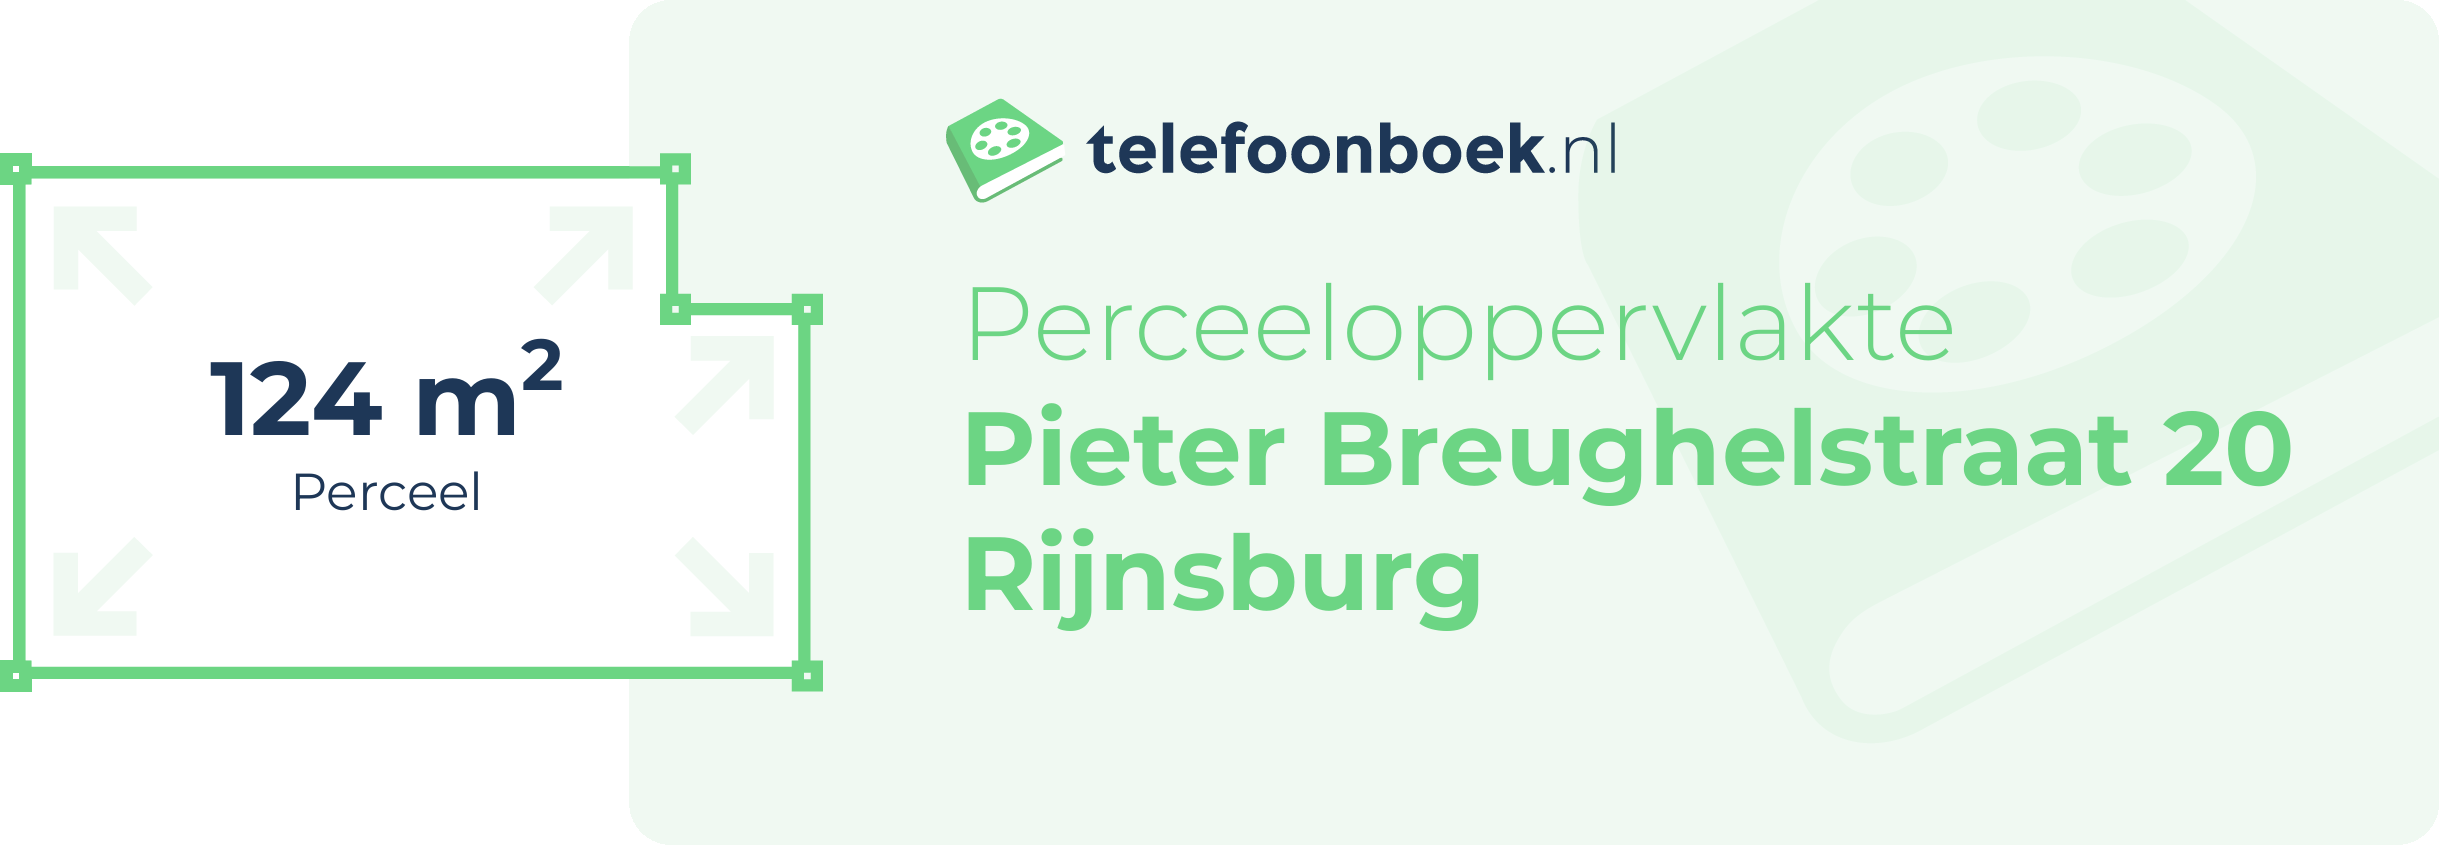 Perceeloppervlakte Pieter Breughelstraat 20 Rijnsburg